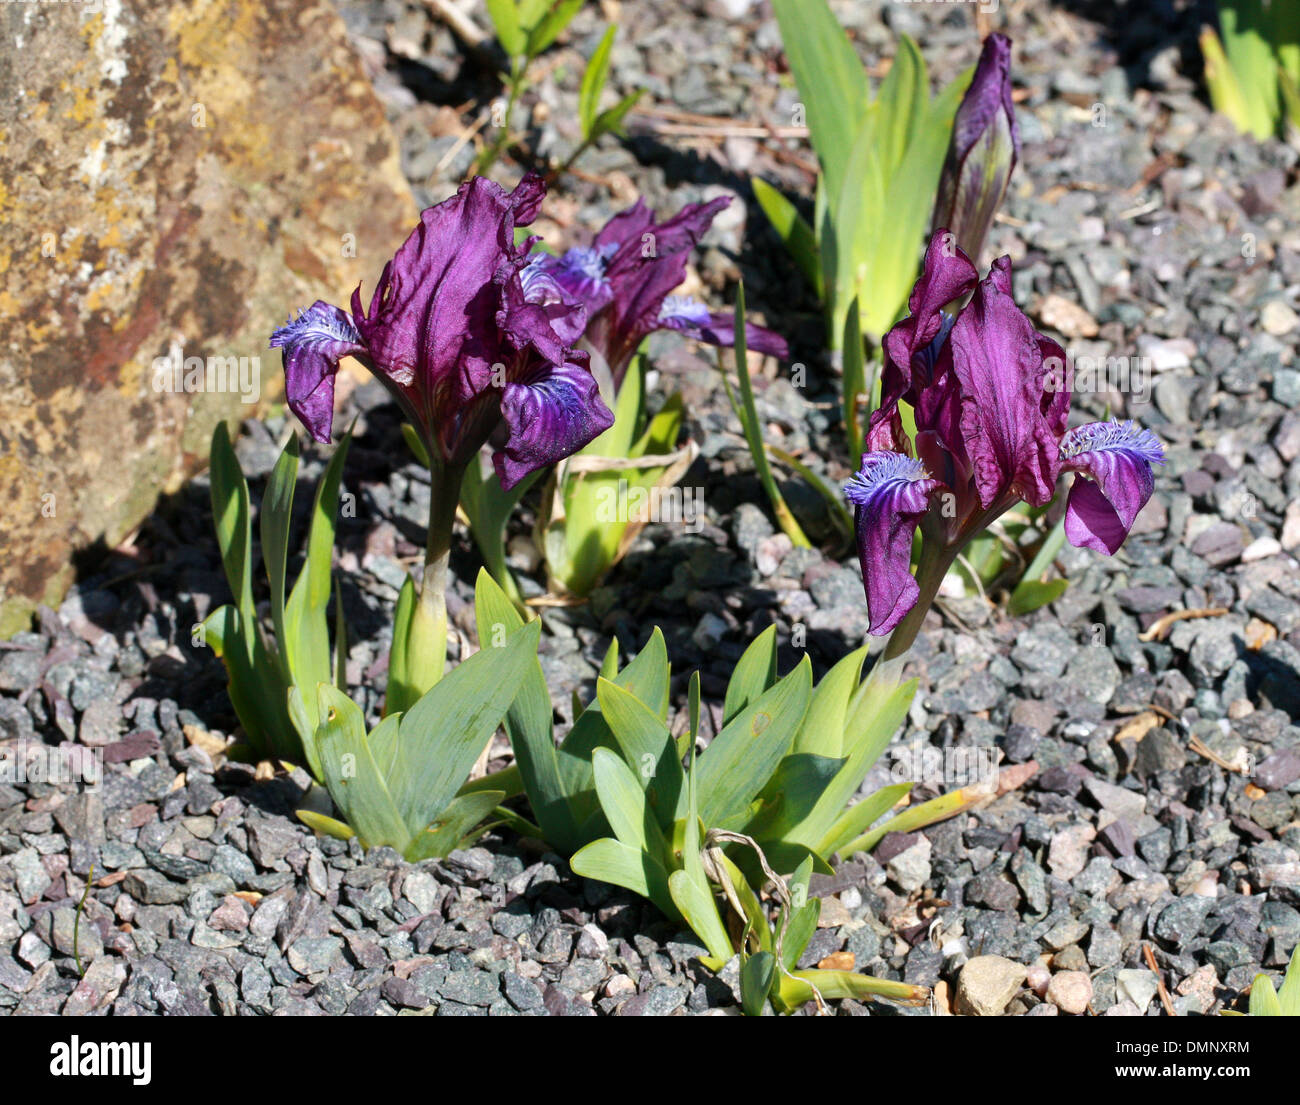 Dwarf Iris, Iris pumila, Iridaceae. Europe. It ranges from Austria through eastern Europe and the Balkans, Ukraine, Russia. Stock Photo